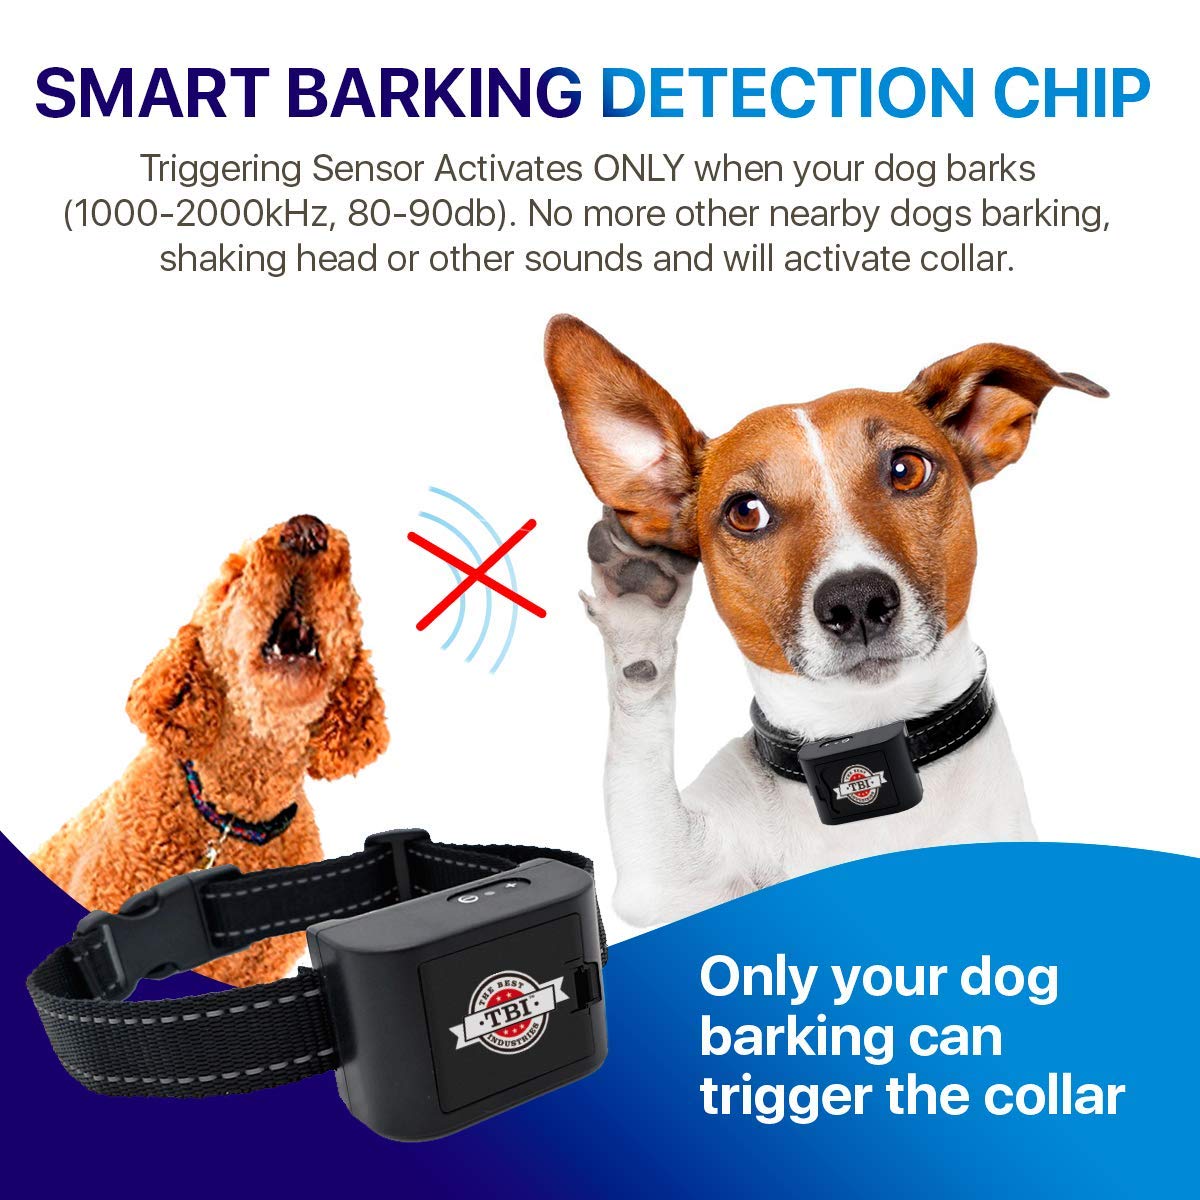 TBI Pro Upgraded Bark Collar - Smart Detection Module - Dual Stop Anti Barking Modes: Beep/Vibration/Shock Small, Medium, Large Dogs Breeds
amzn.to/2JnjrPu
#dogs #pets #petsupplies, #barkcollar